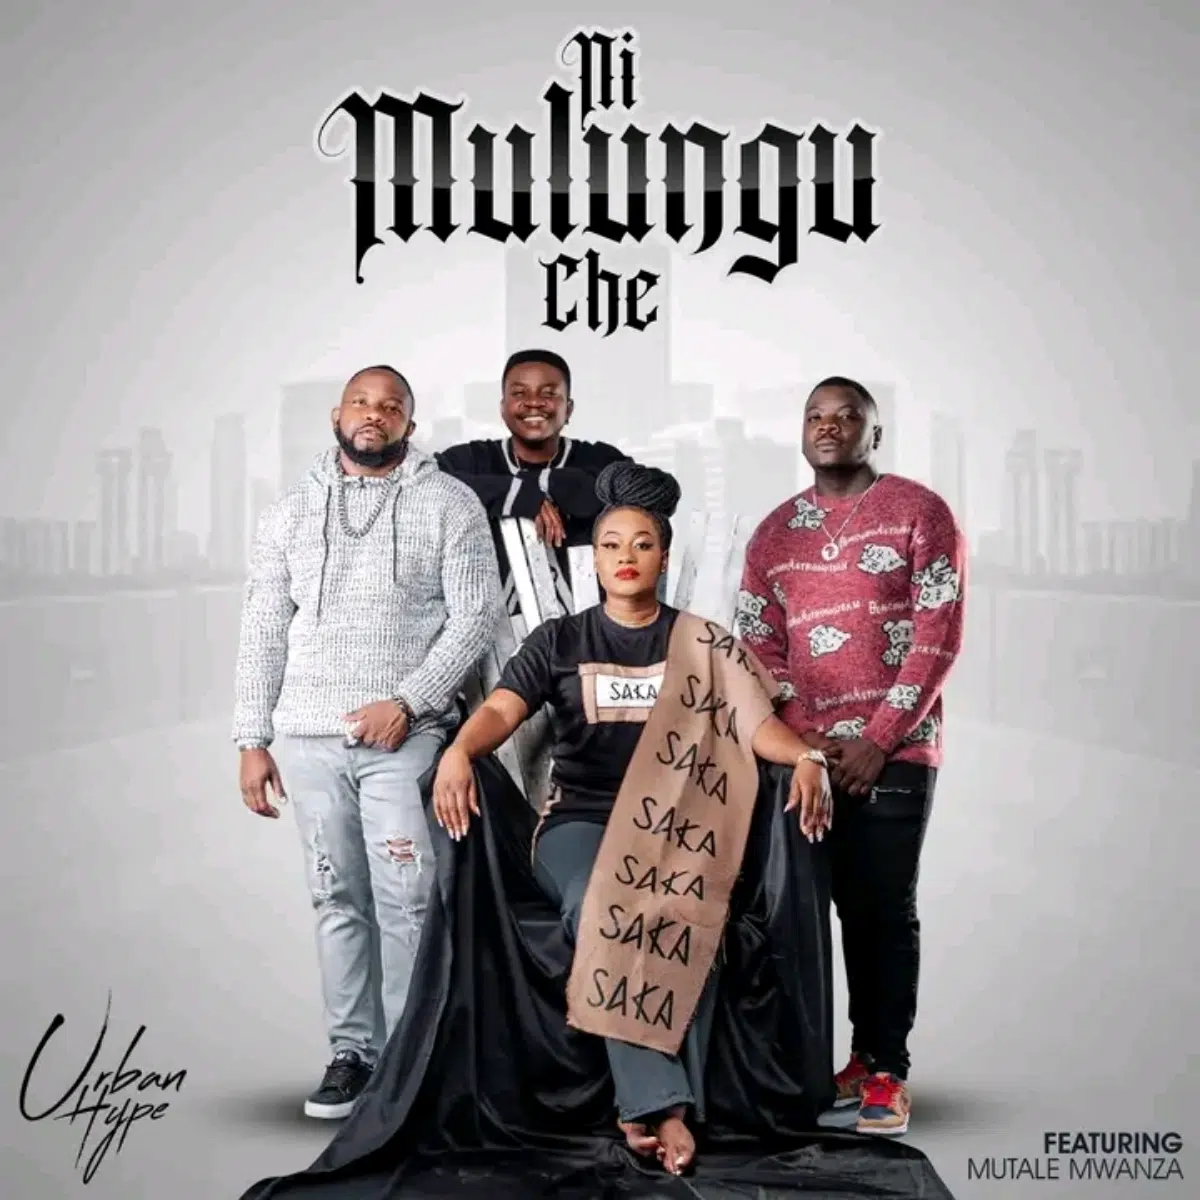 DOWNLOAD: Urban Hype Ft. Mutale Mwanza – “Ni Mulungu Che” Mp3